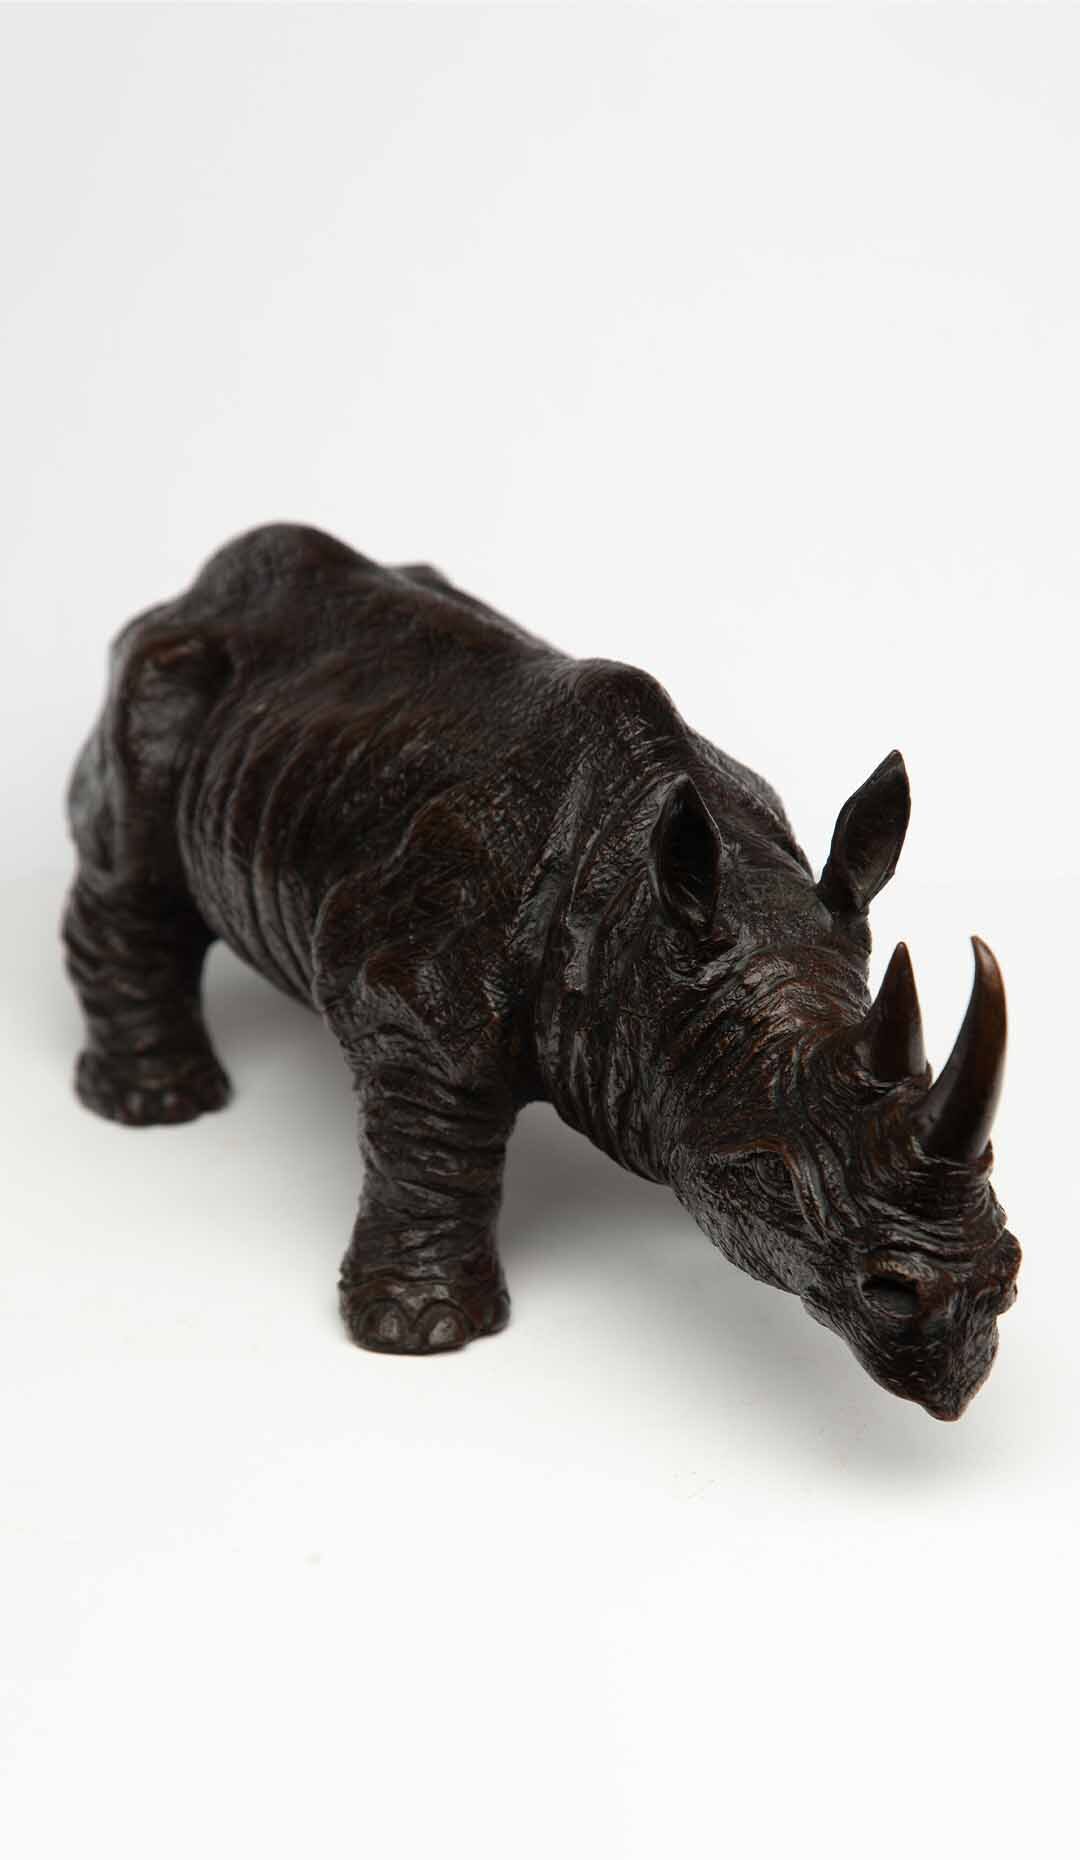 Bronze of a Rhino